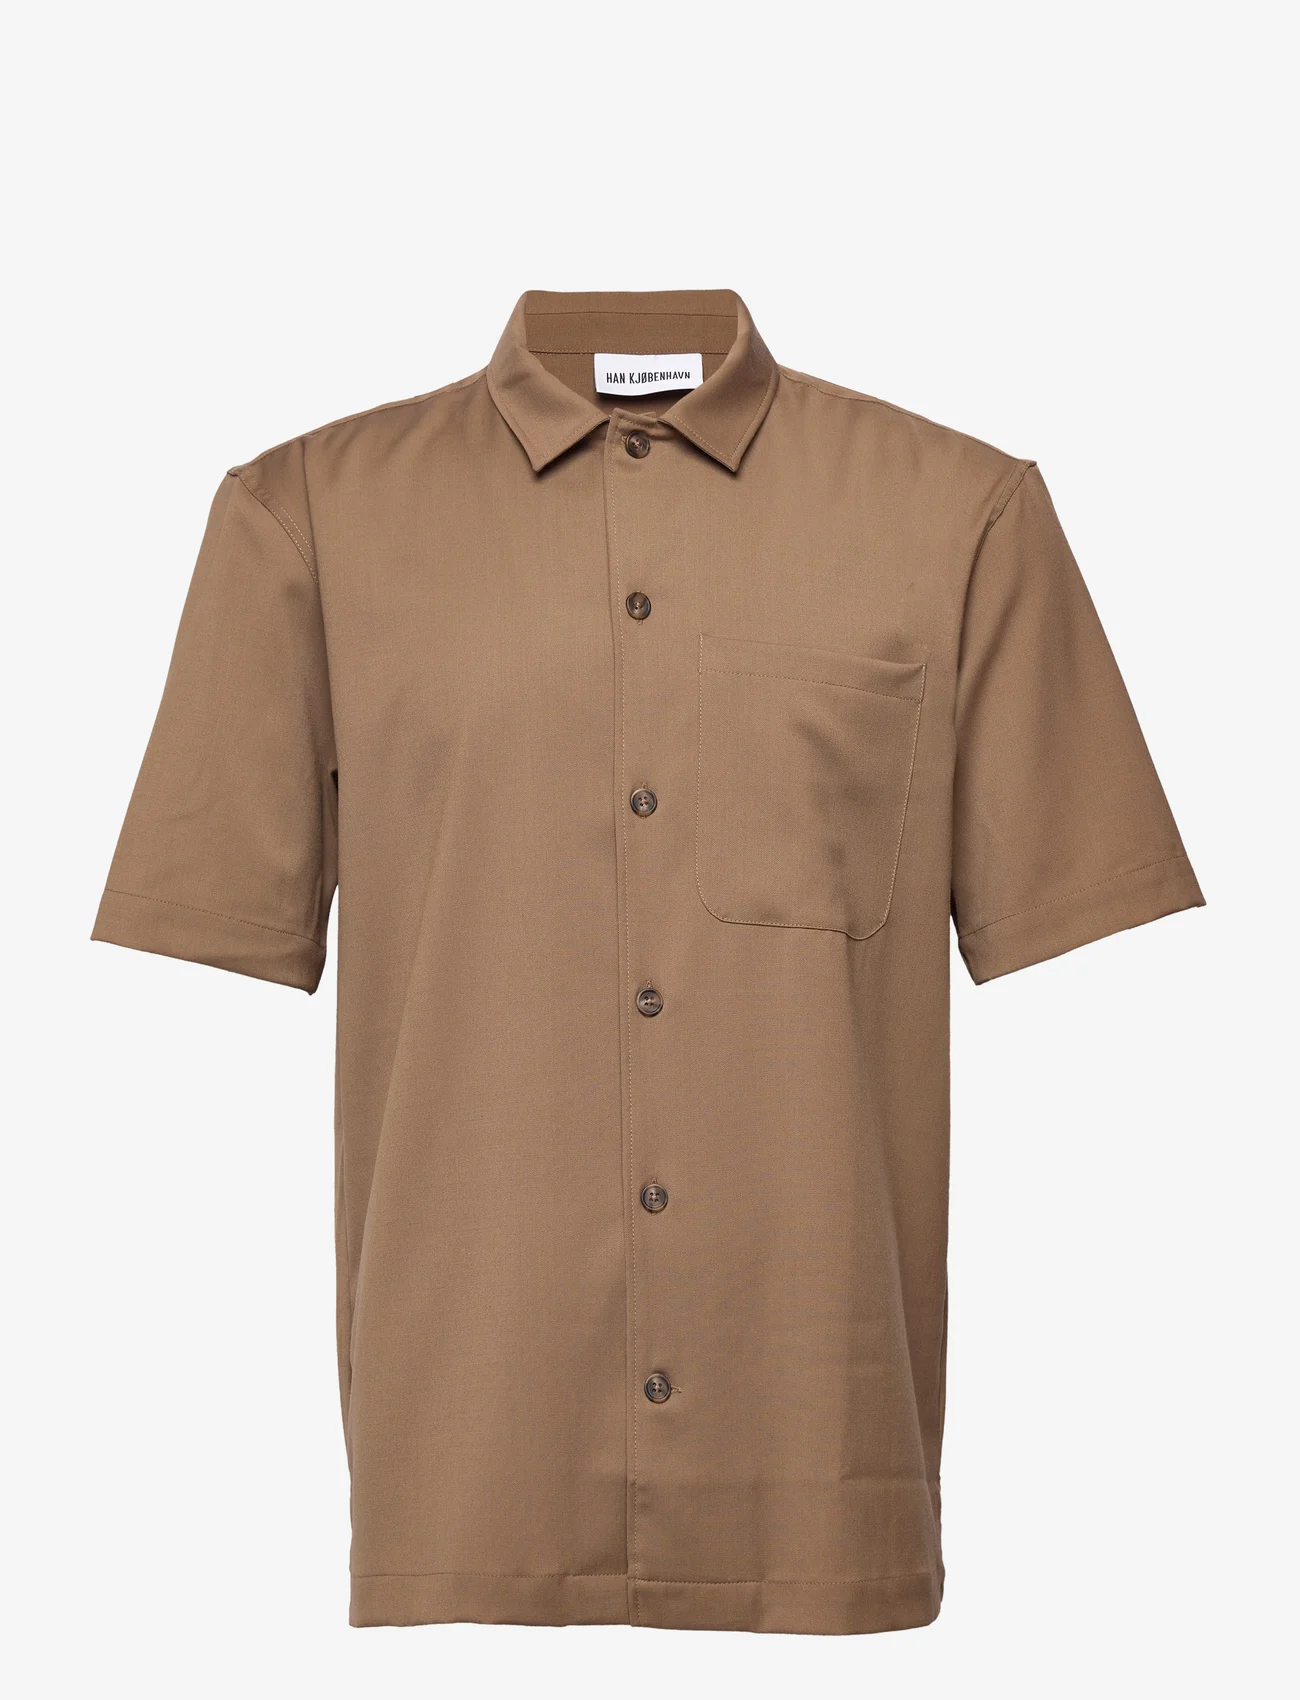 HAN Kjøbenhavn - Summer Shirt - basic shirts - light brown - 0